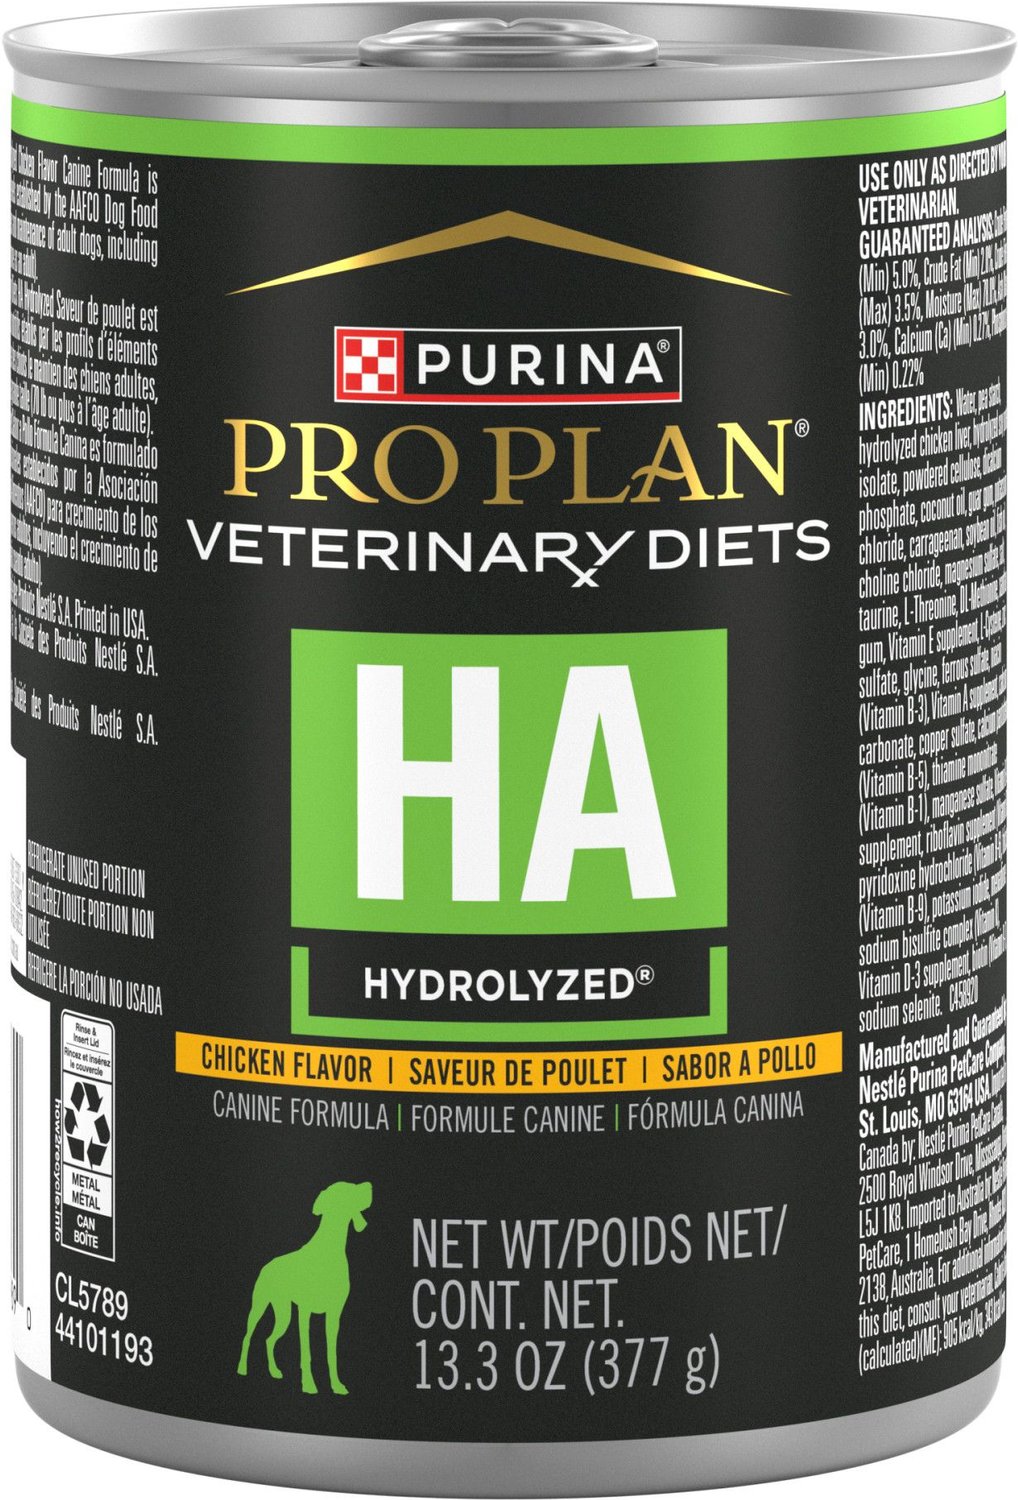 purina ha hydrolyzed cat food